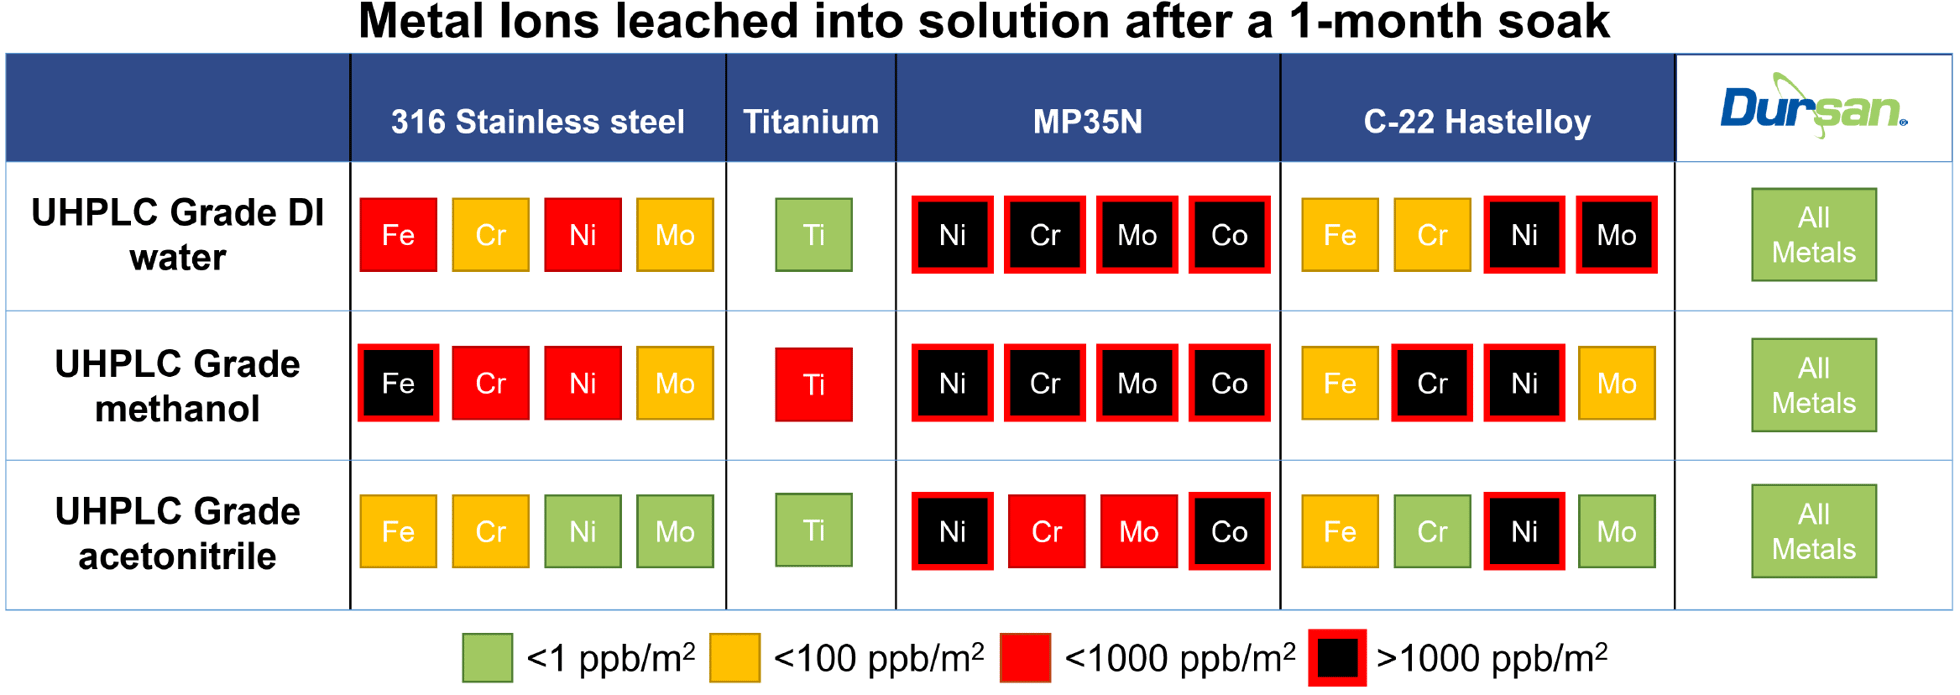 Metal ion data summary